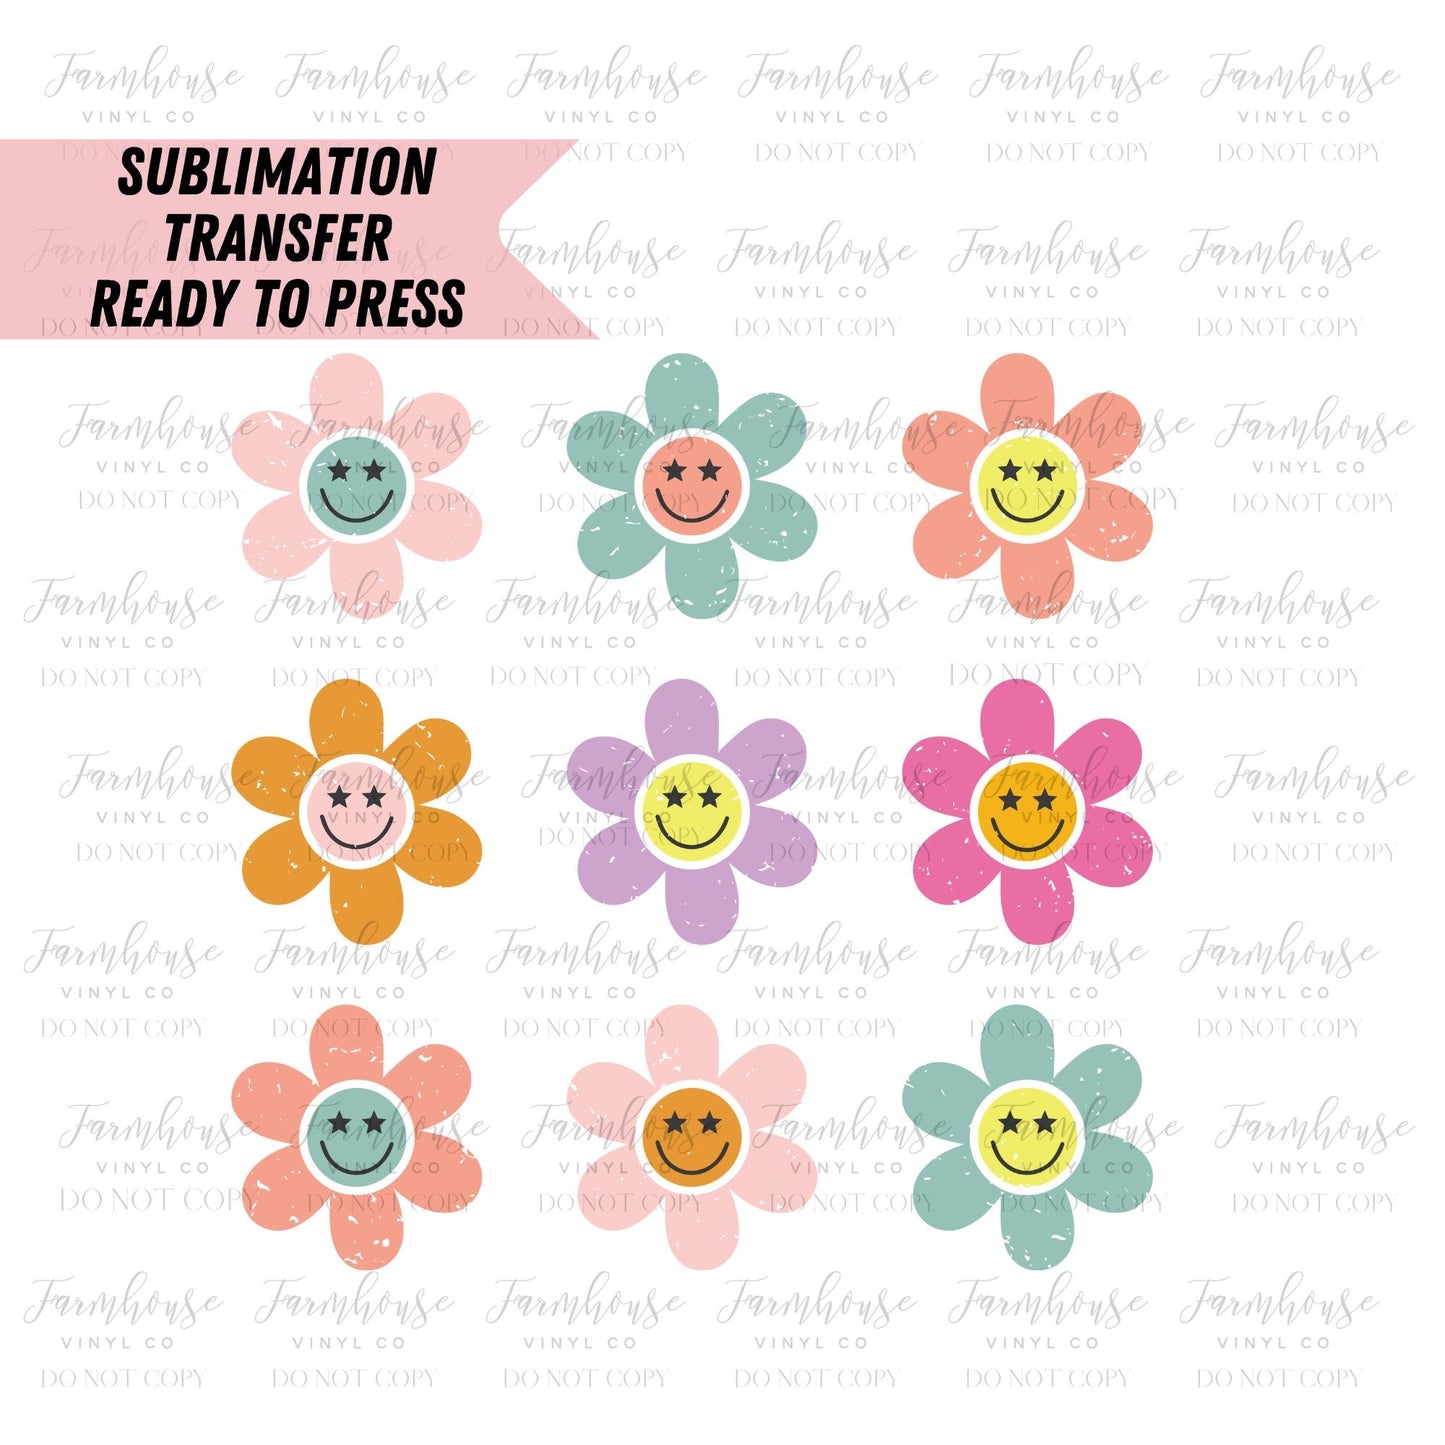 Floral Smiley Face Retro  Ready to Press Sublimation Transfer - Farmhouse Vinyl Co